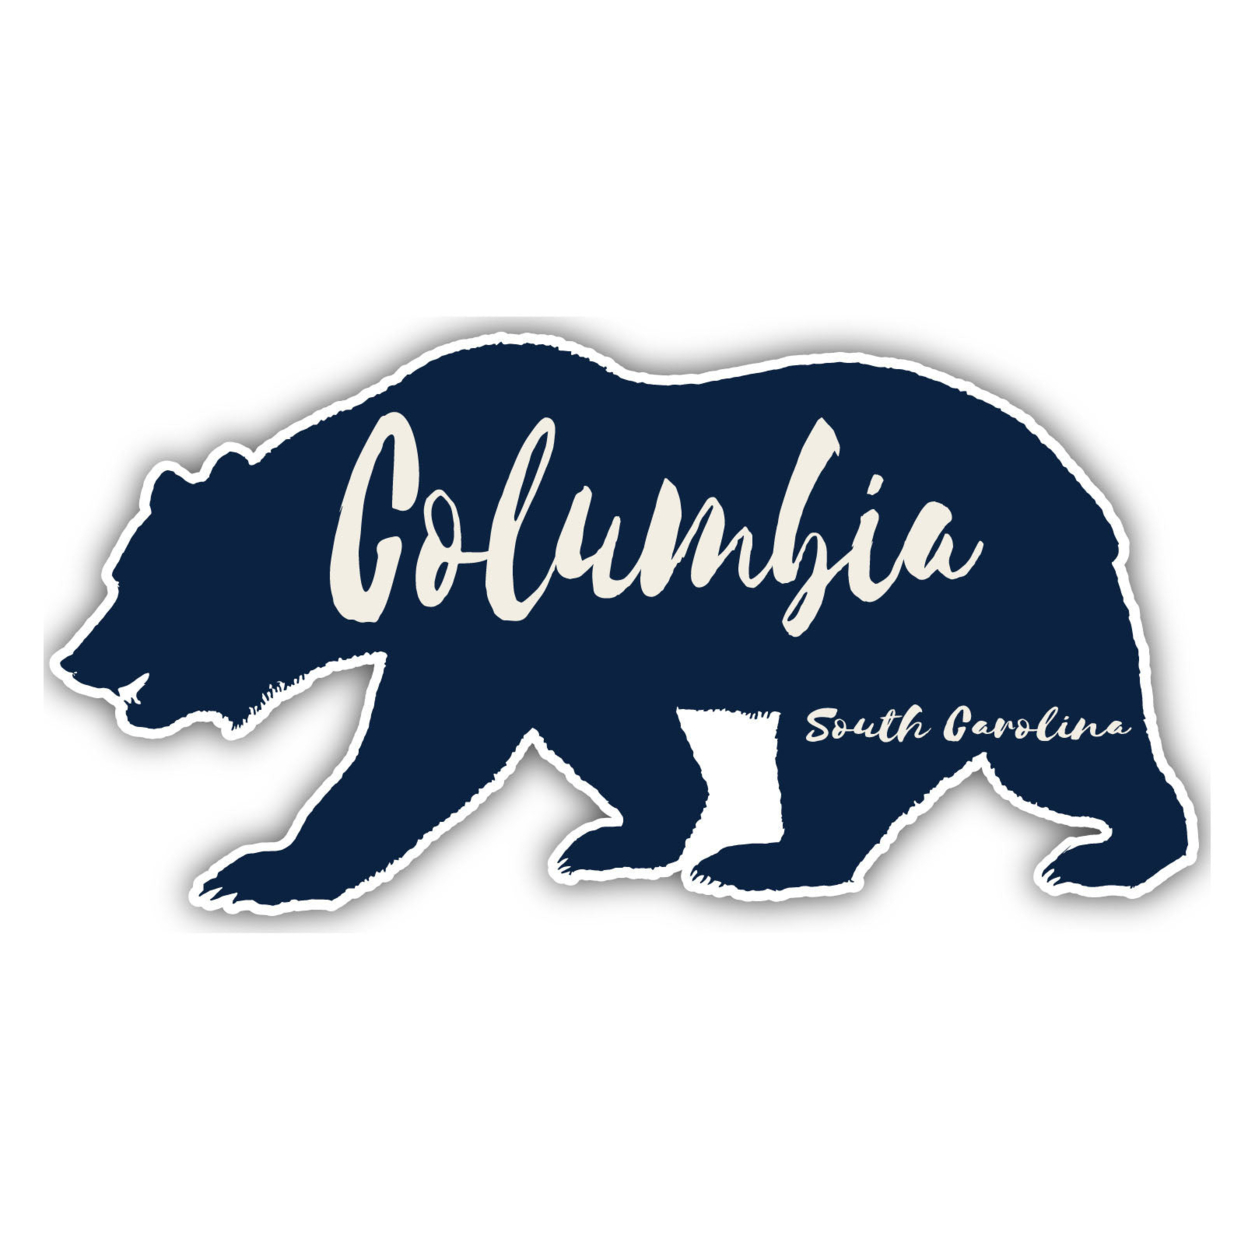 Columbia South Carolina Souvenir Decorative Stickers (Choose Theme And Size) - Single Unit, 8-Inch, Bear